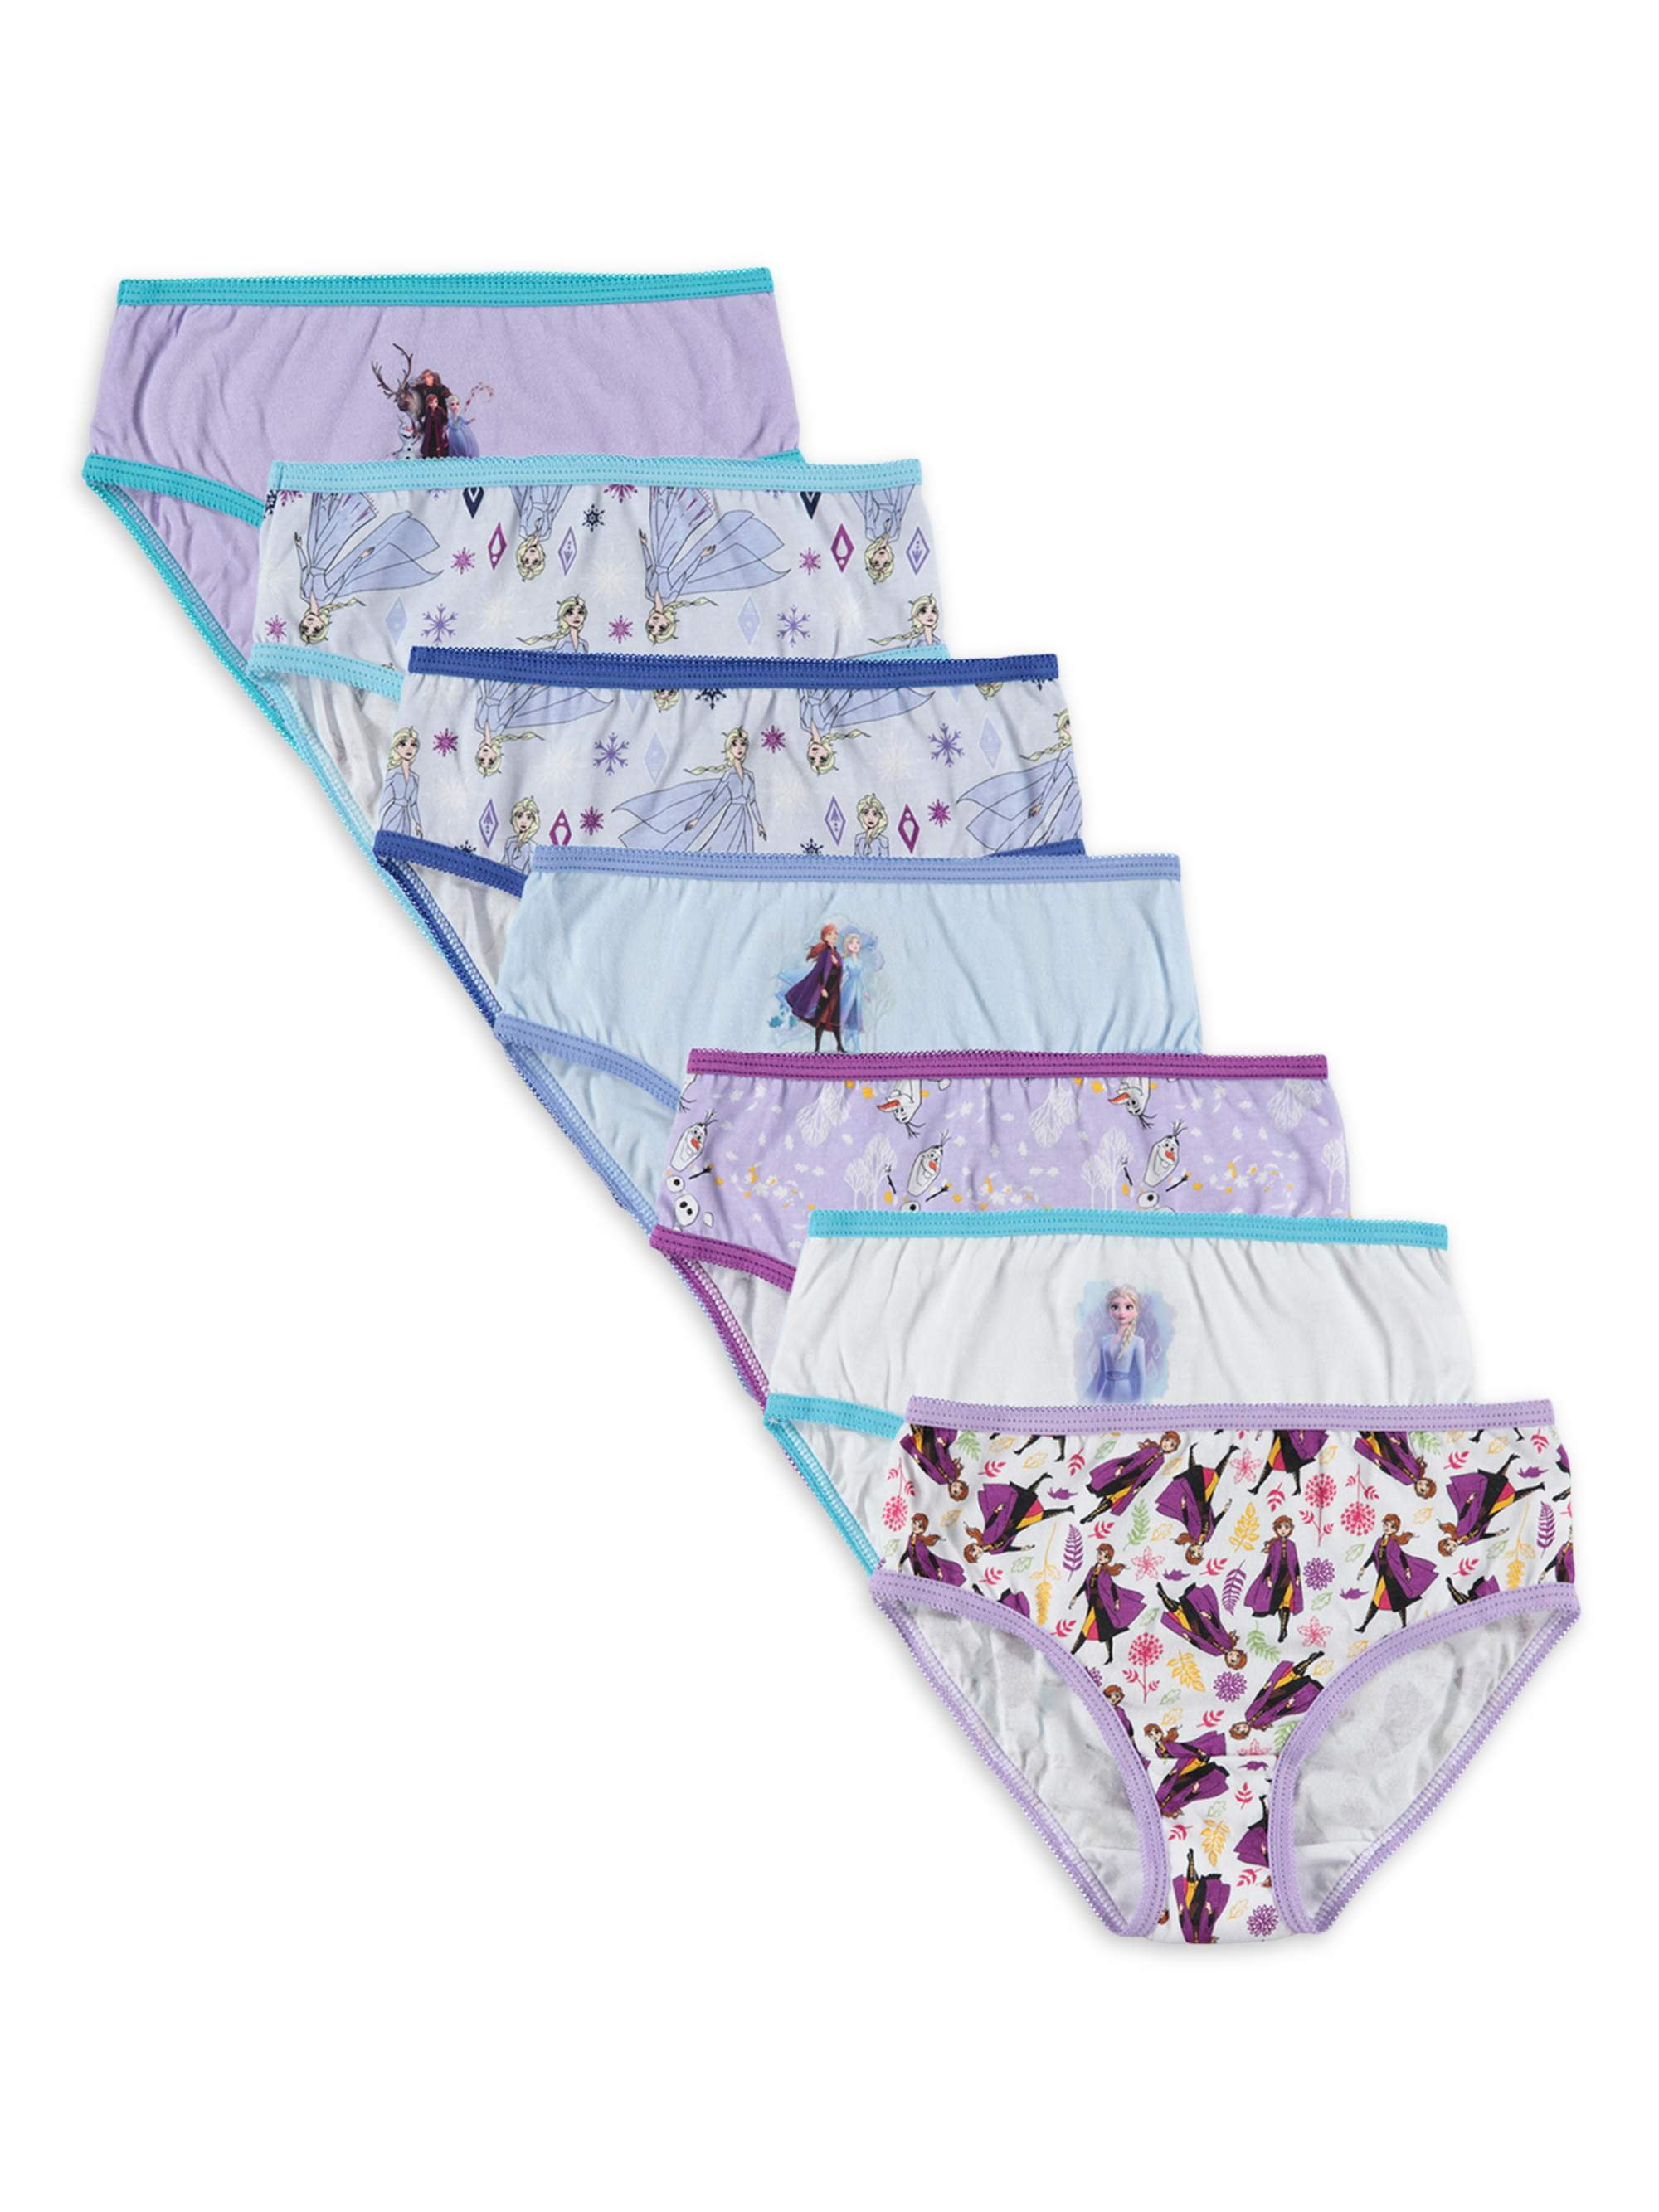 Frozen Girls Briefs Panties, 7 Pack, Sizes 4-8 